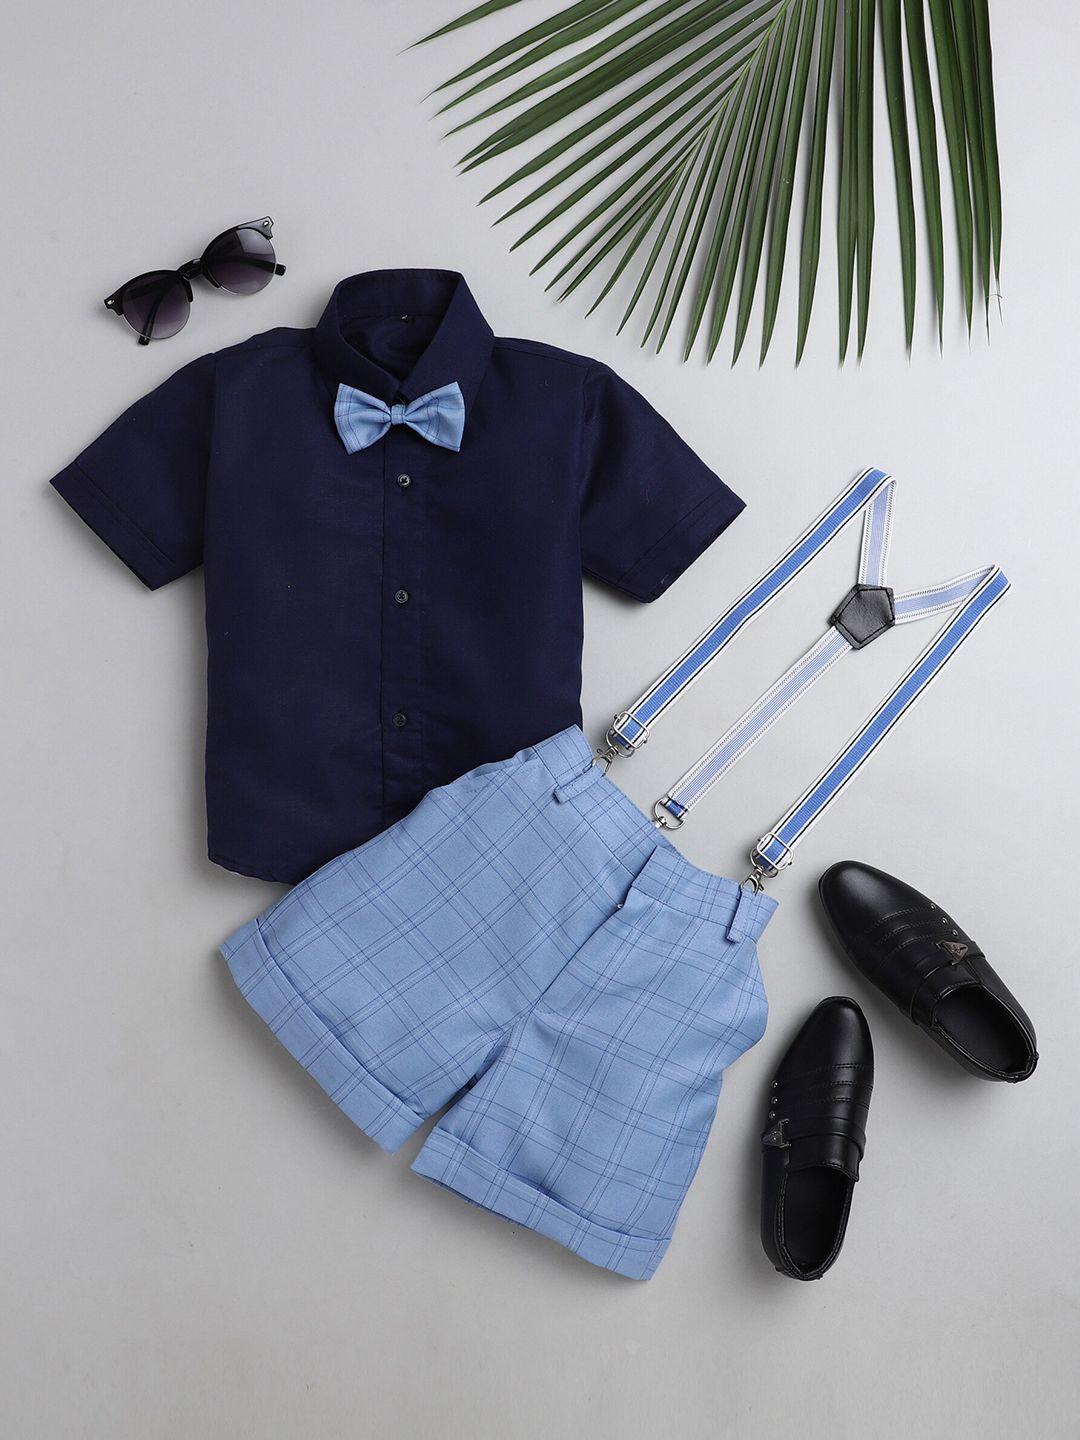 jeetethnics-boys-blue-&-navy-blue-shirt-&-shorts-with-suspenders